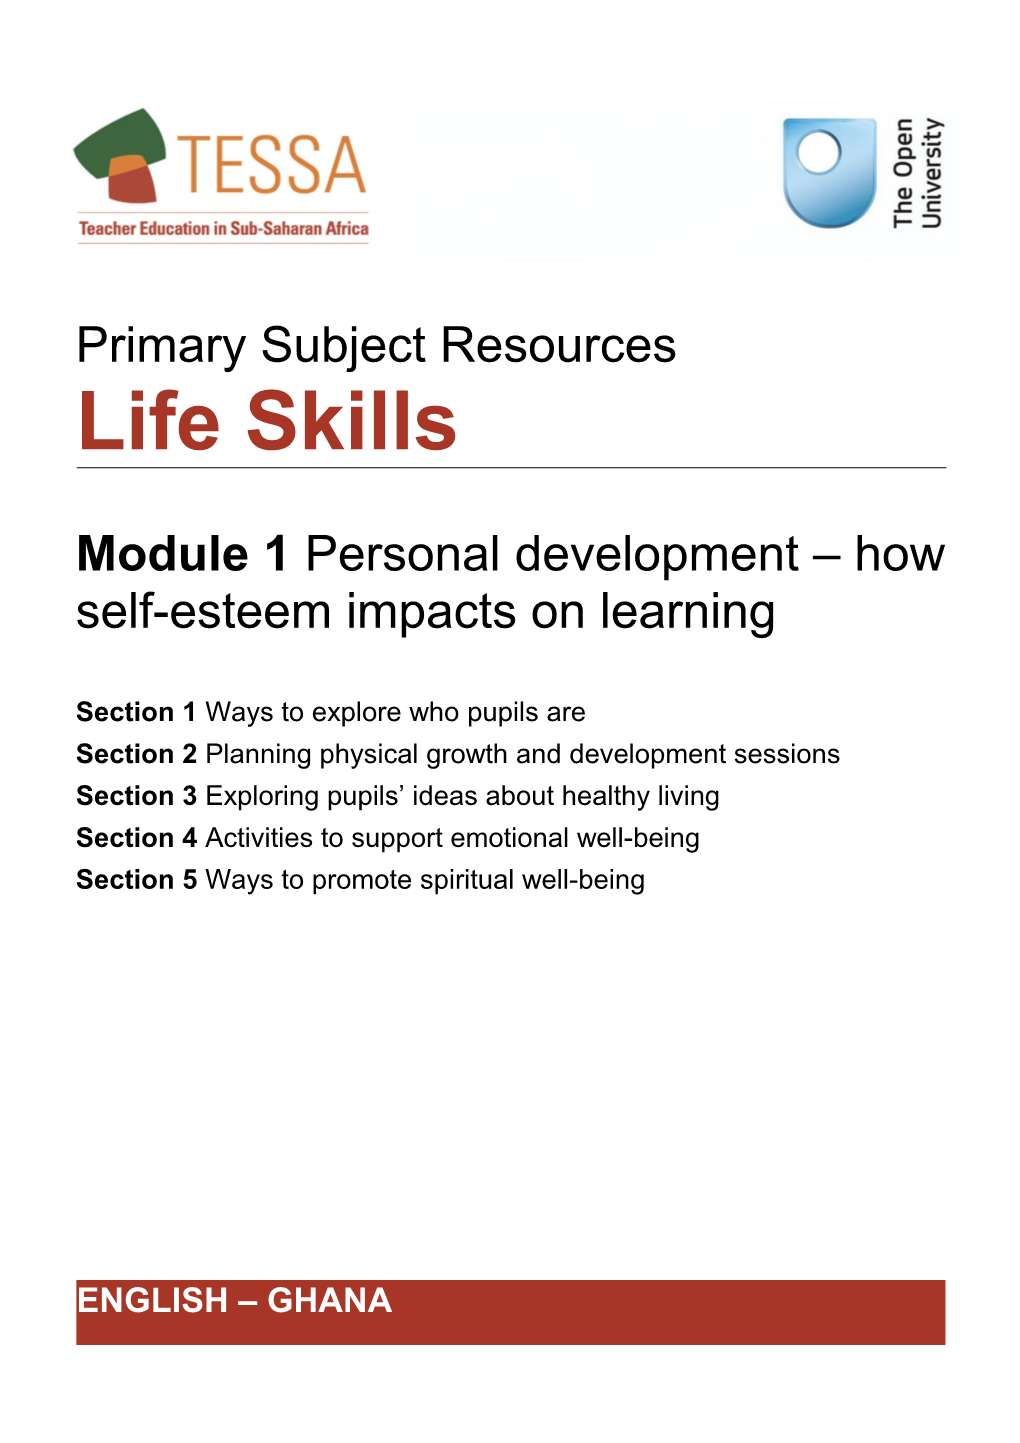 Module 1: Personal Development How Self-Esteem Impacts on Learning